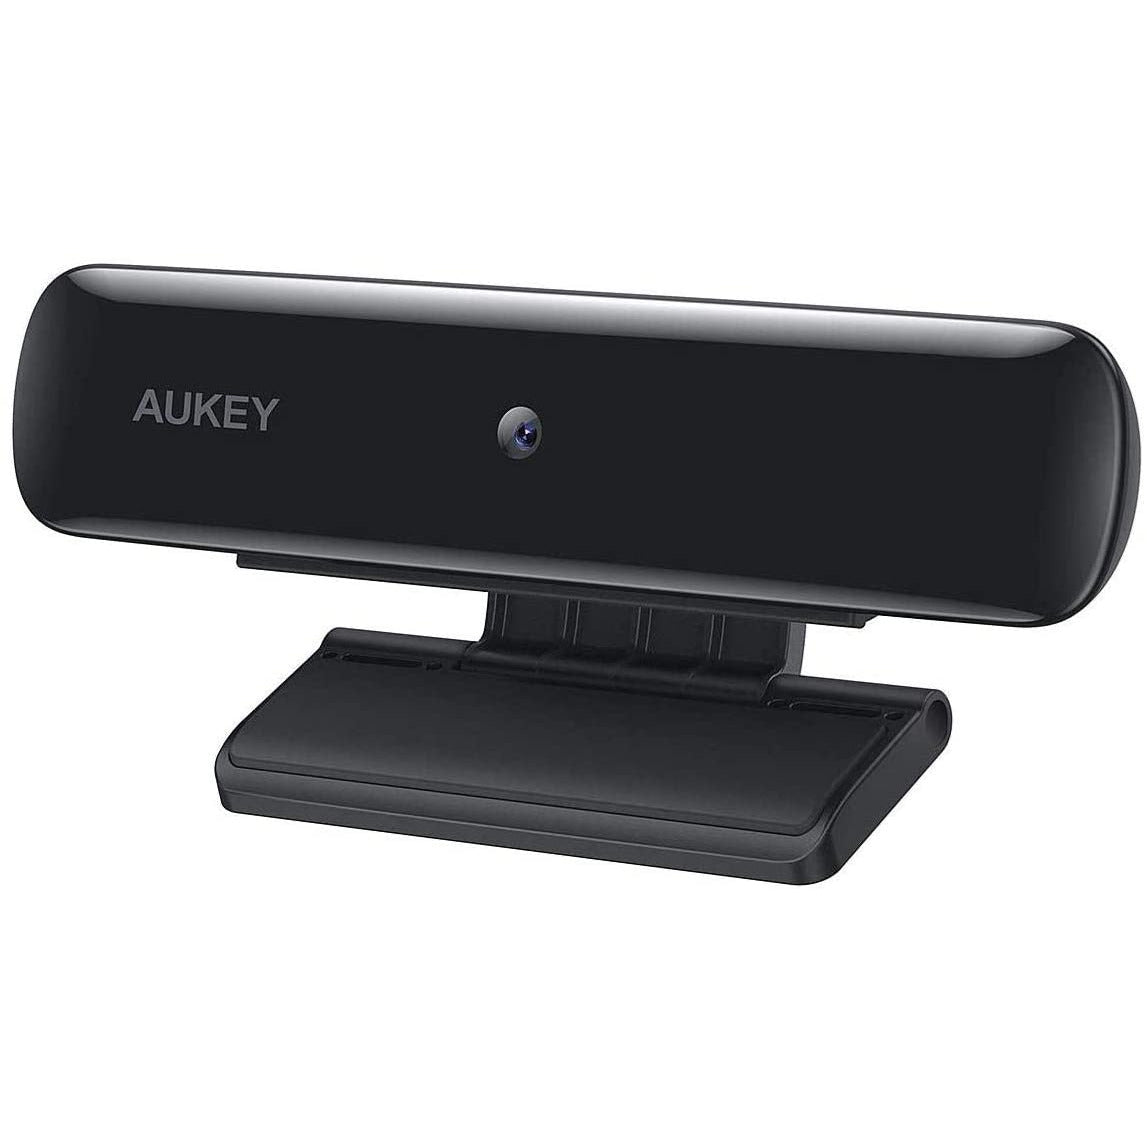 Aukey 1080p High-Definition Webcam PC-W1